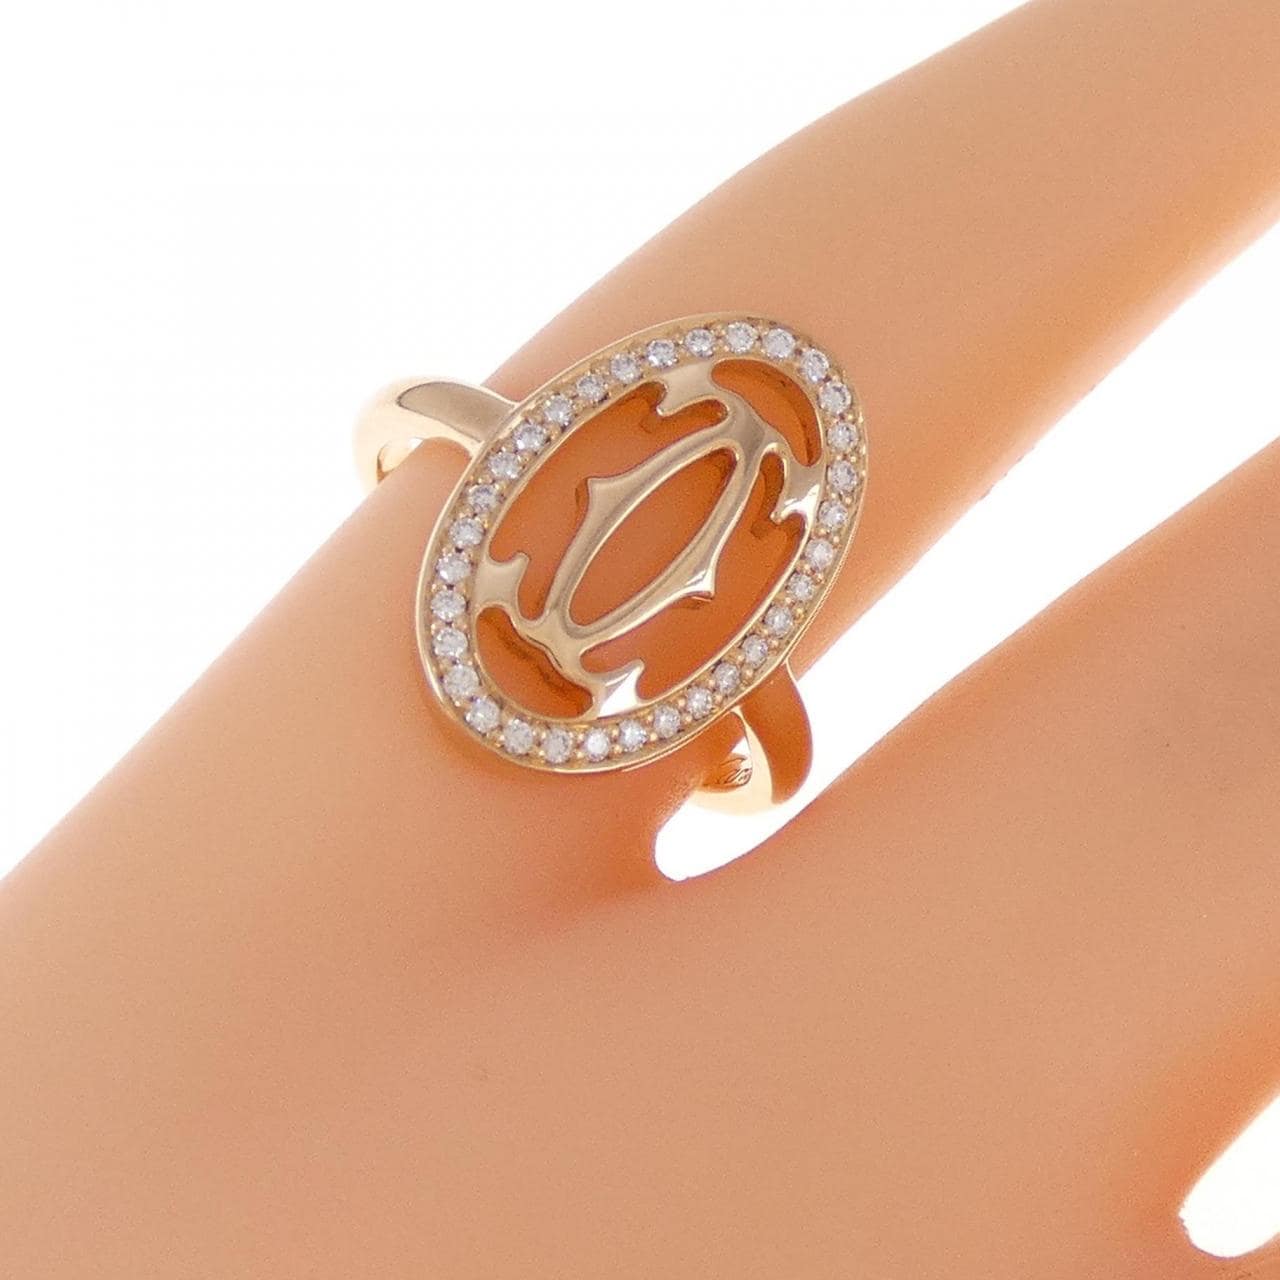 Cartier logo ring